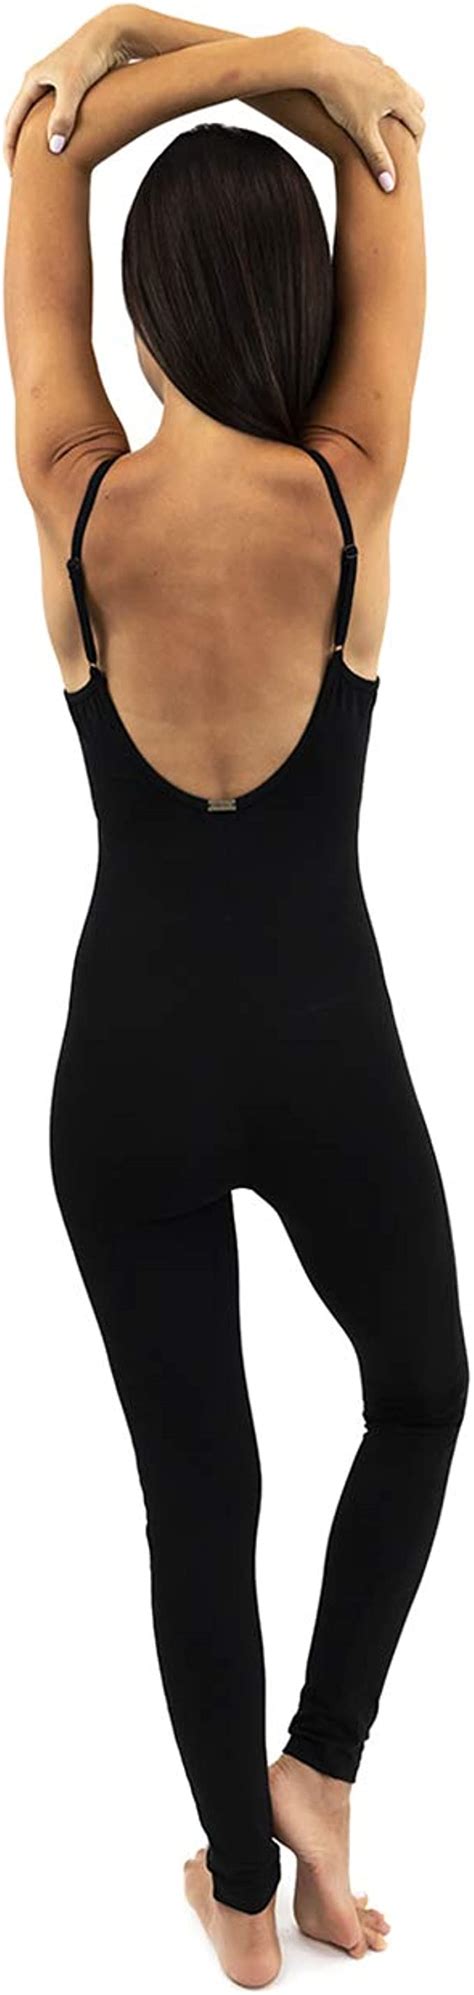 treelance yoga bodysuit one piece bodysuits workout organic cotton bra open back jumpsuit for